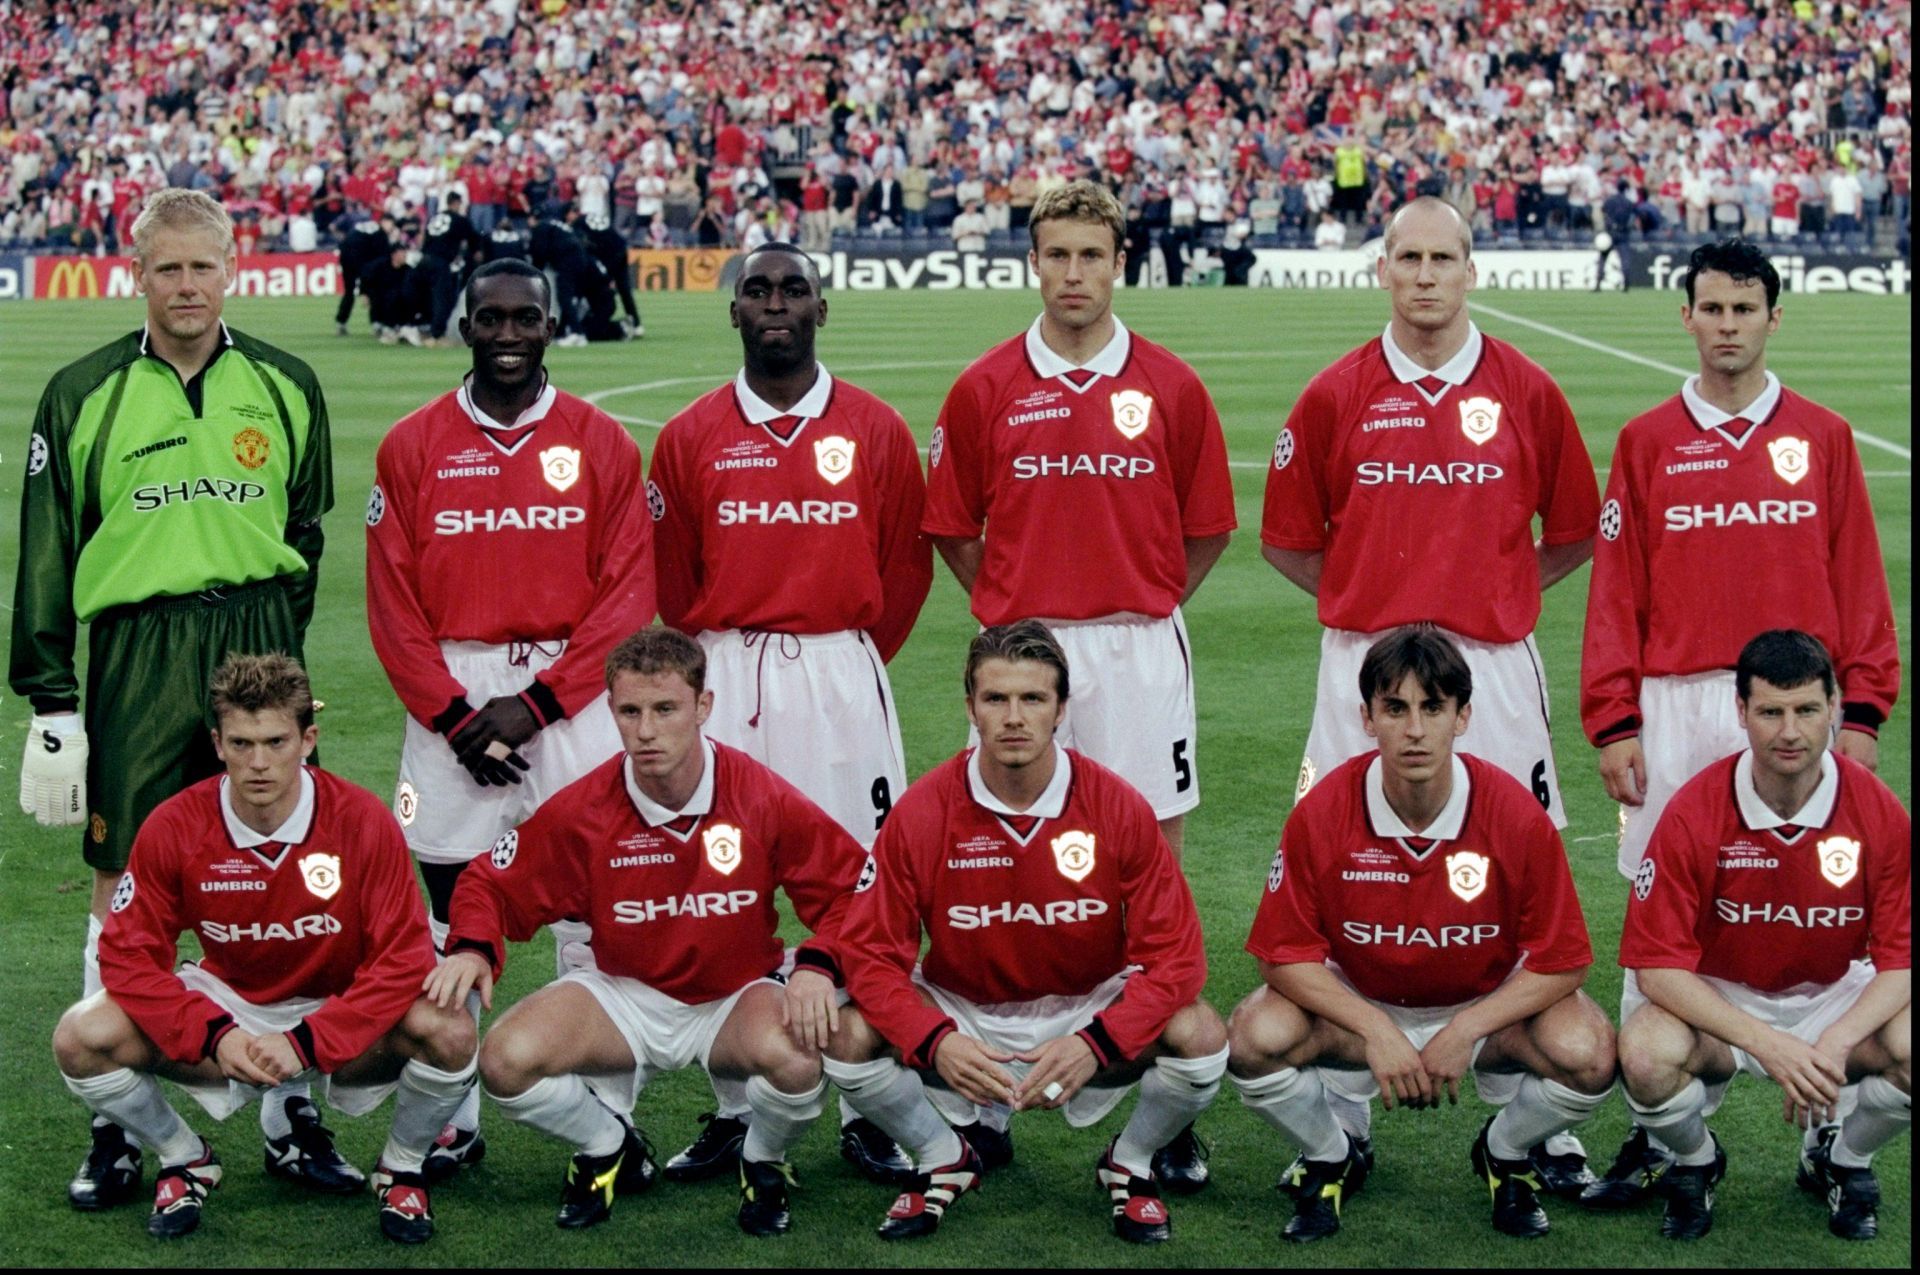 The Manchester United team that won the 1998-99 Premier League title